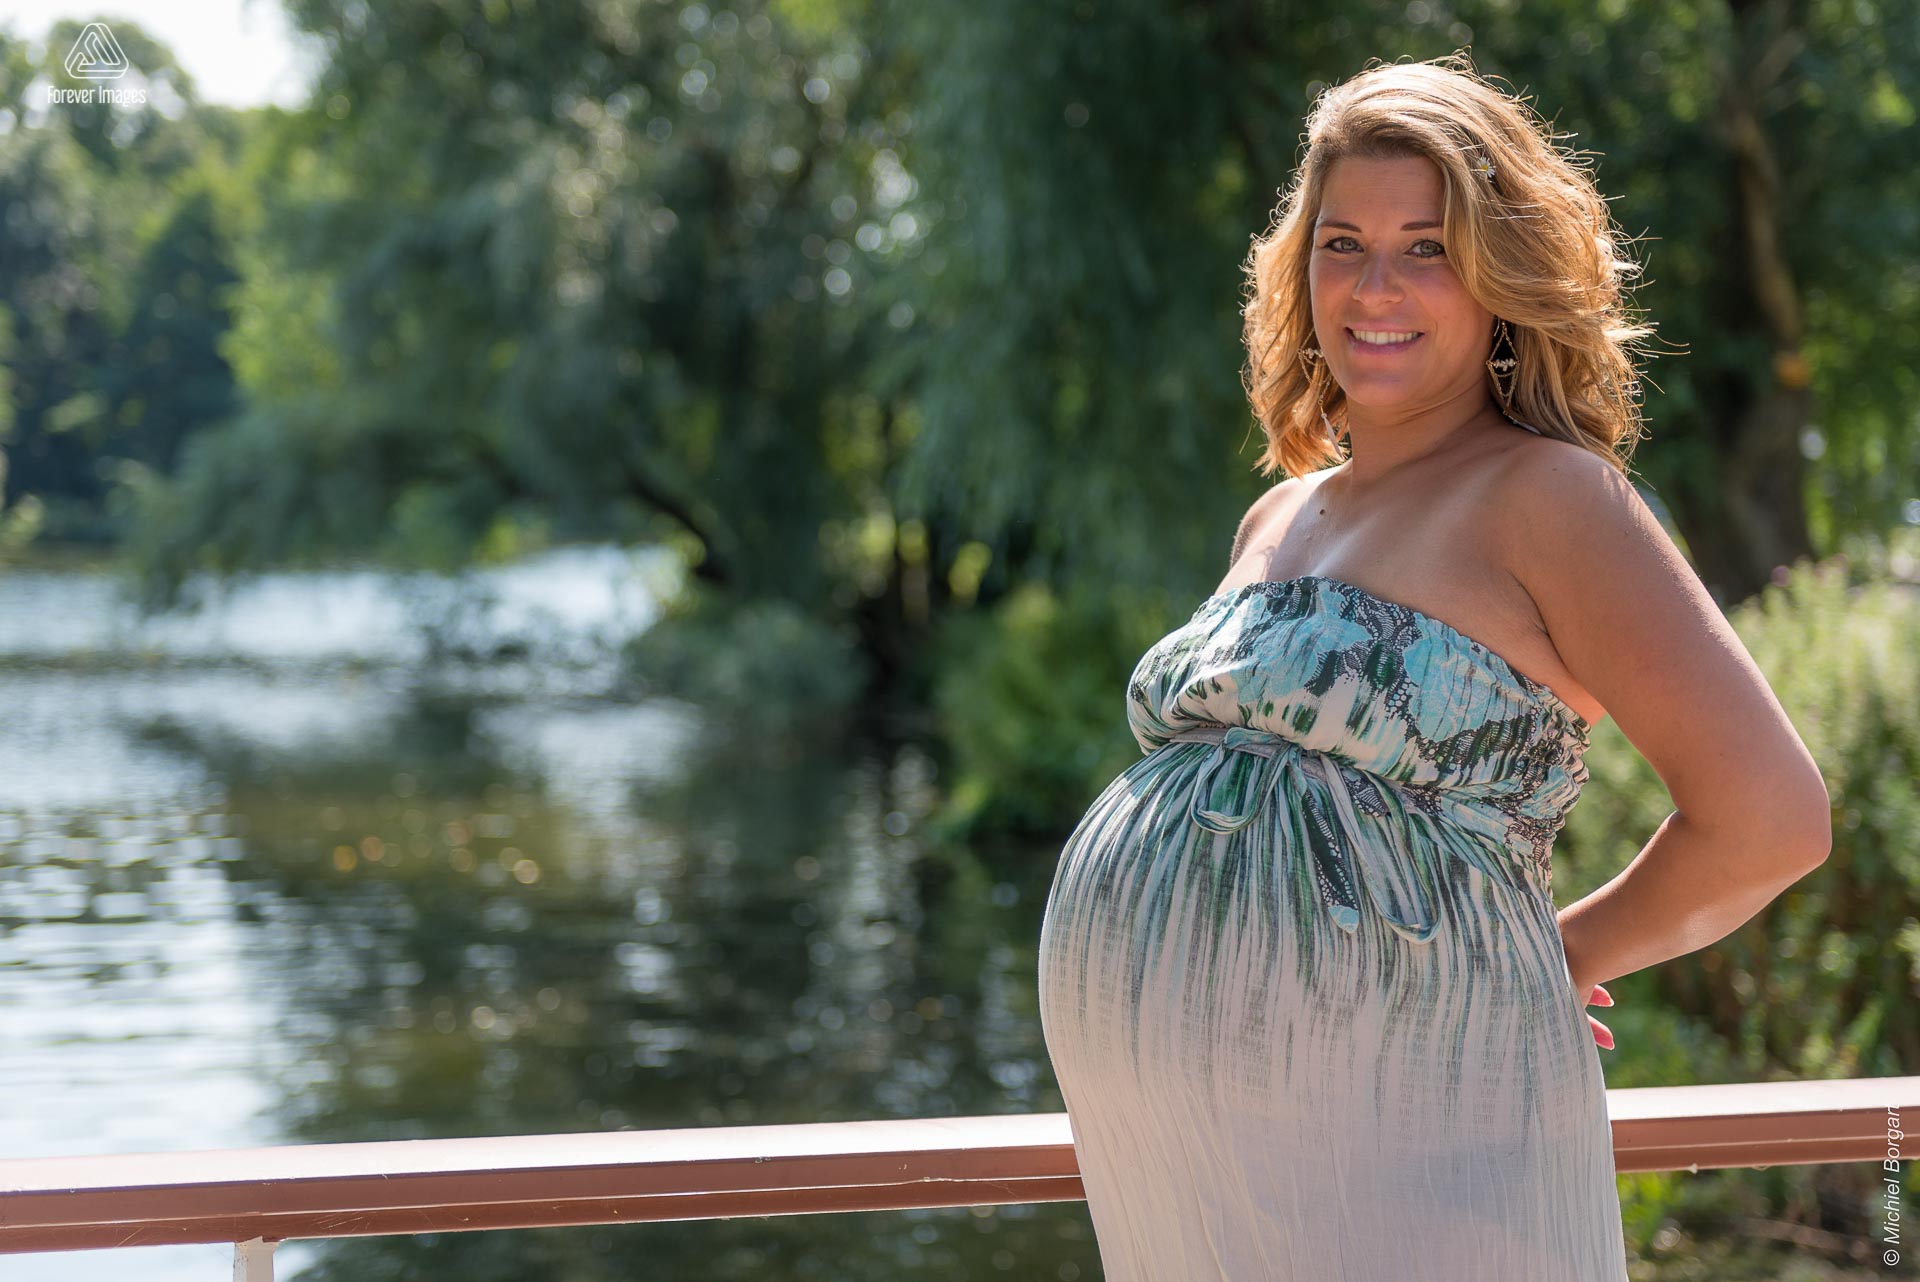 Pregnancy photo young mother outdoors in park on bridge in the sun | Simone t Hooft-Creutzburg | Portrait Photographer Michiel Borgart - Forever Images.